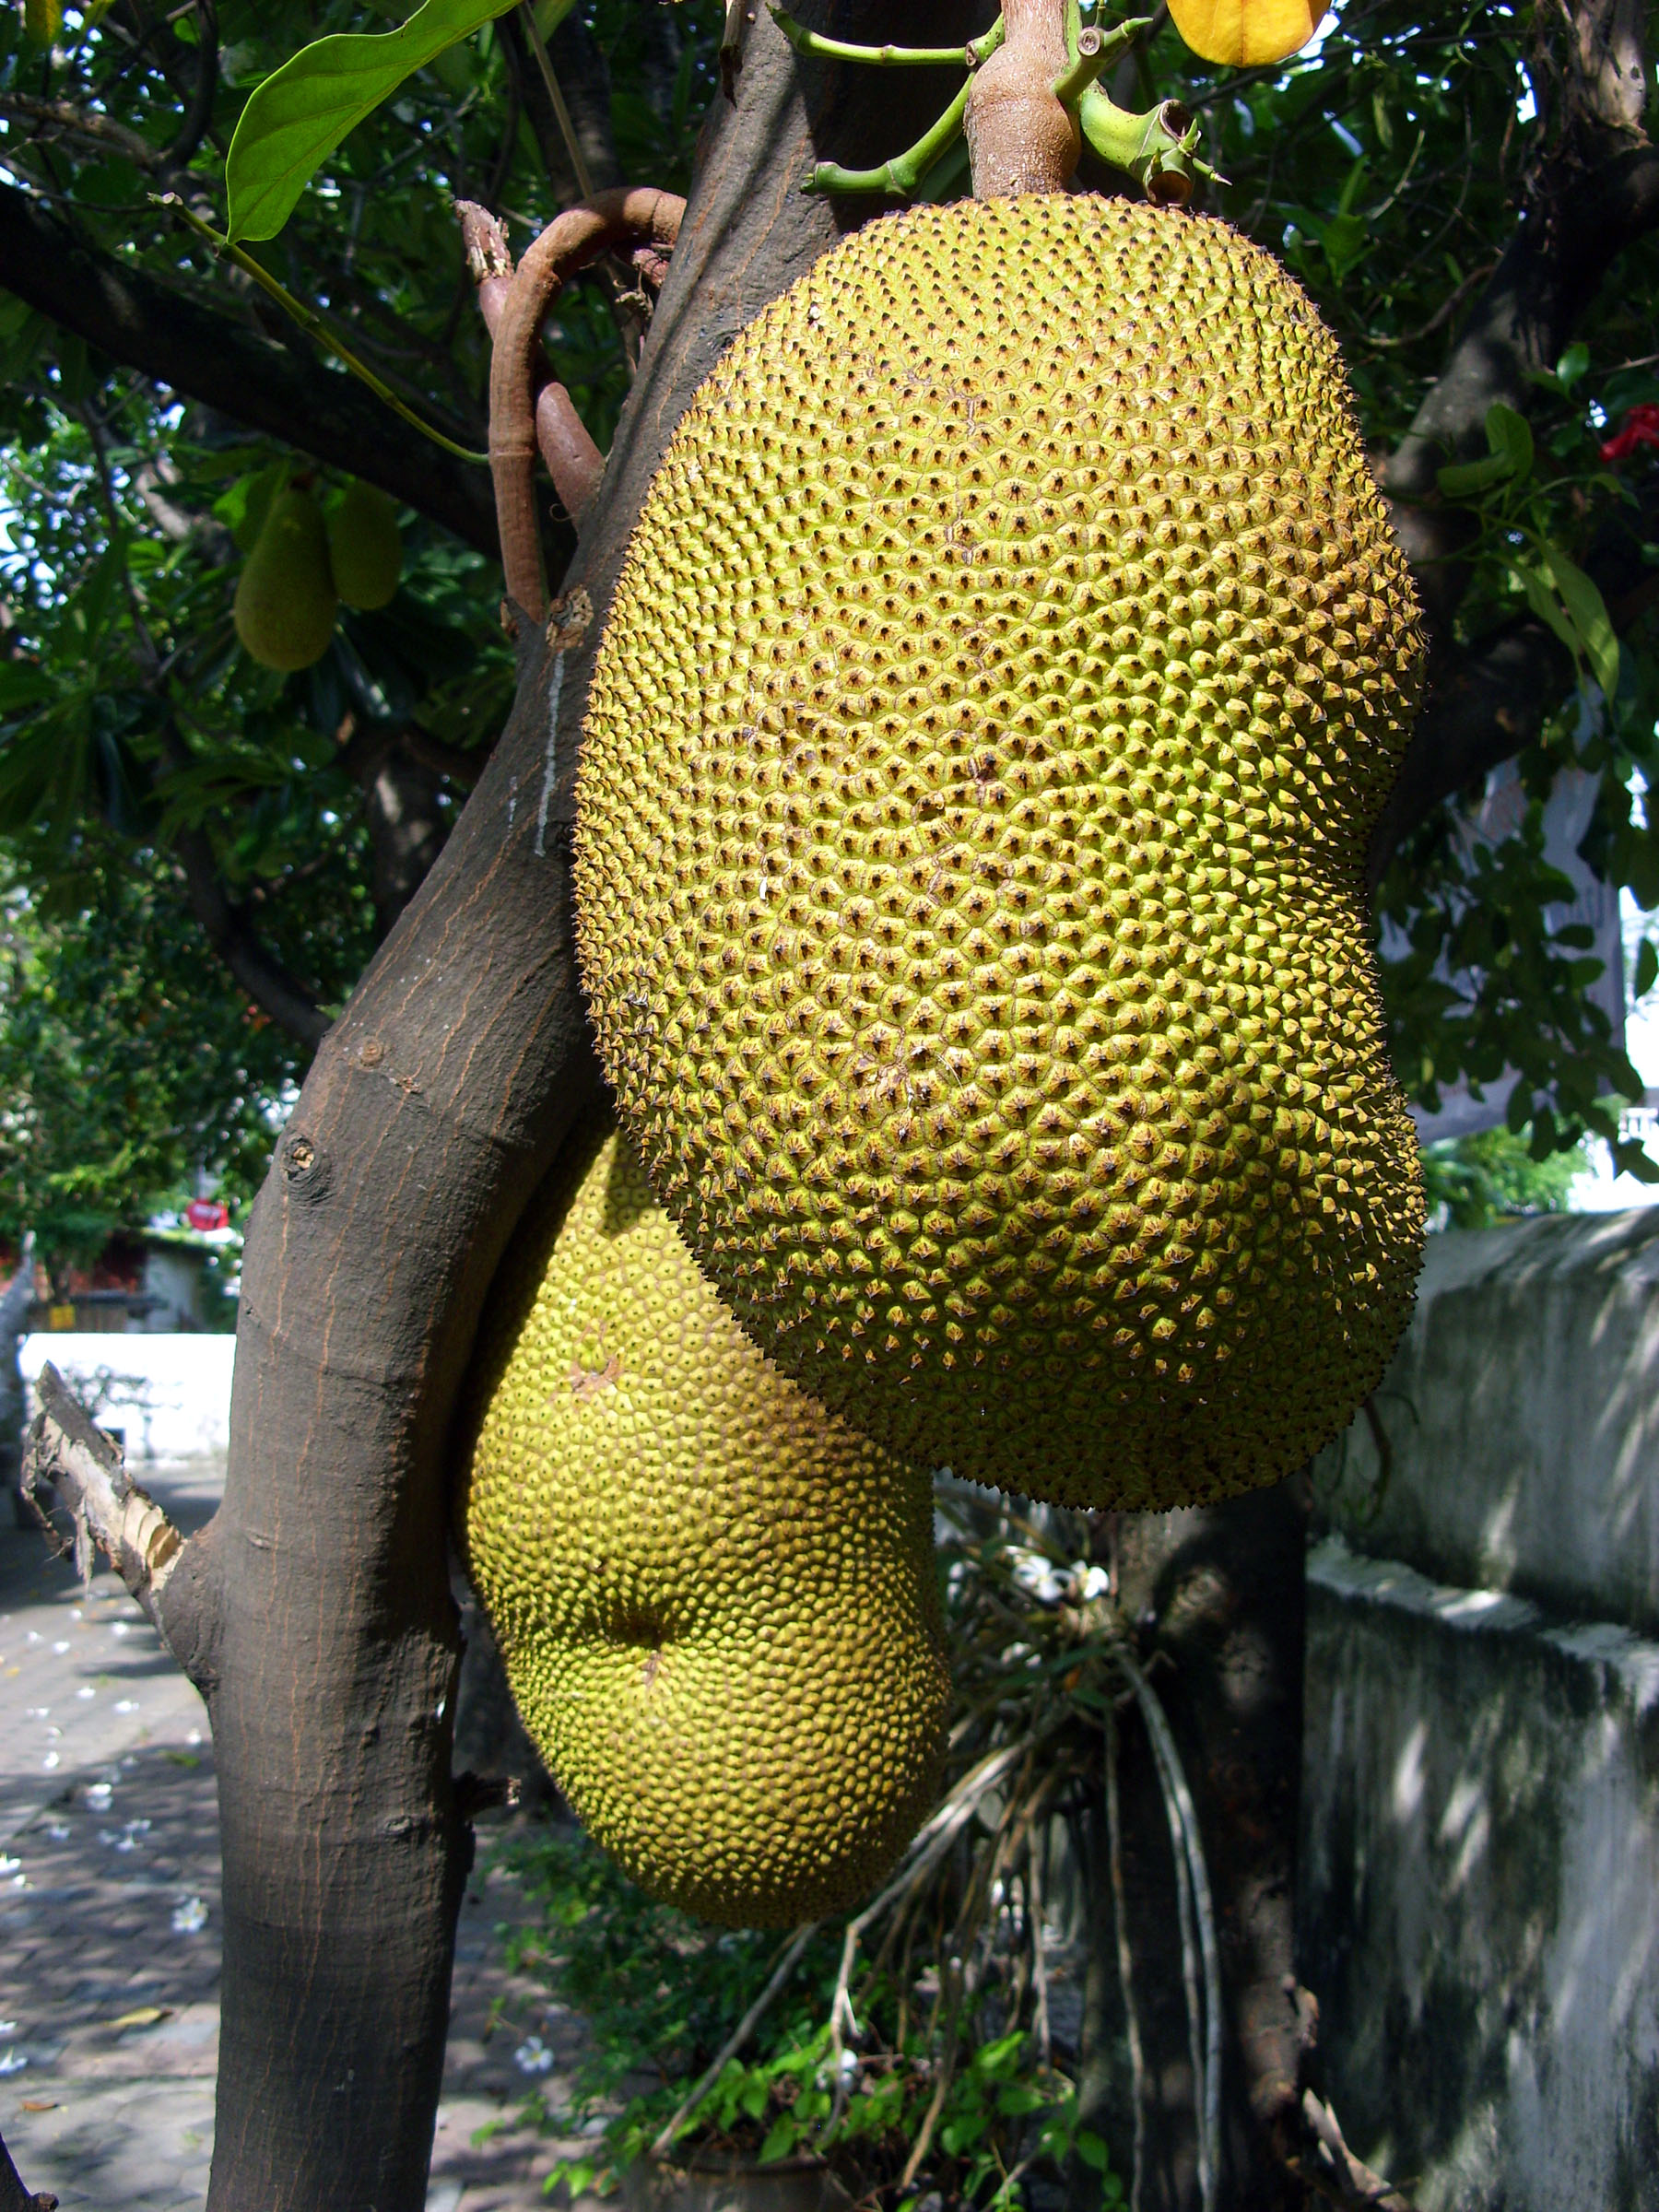 Jackfruit, cempedak